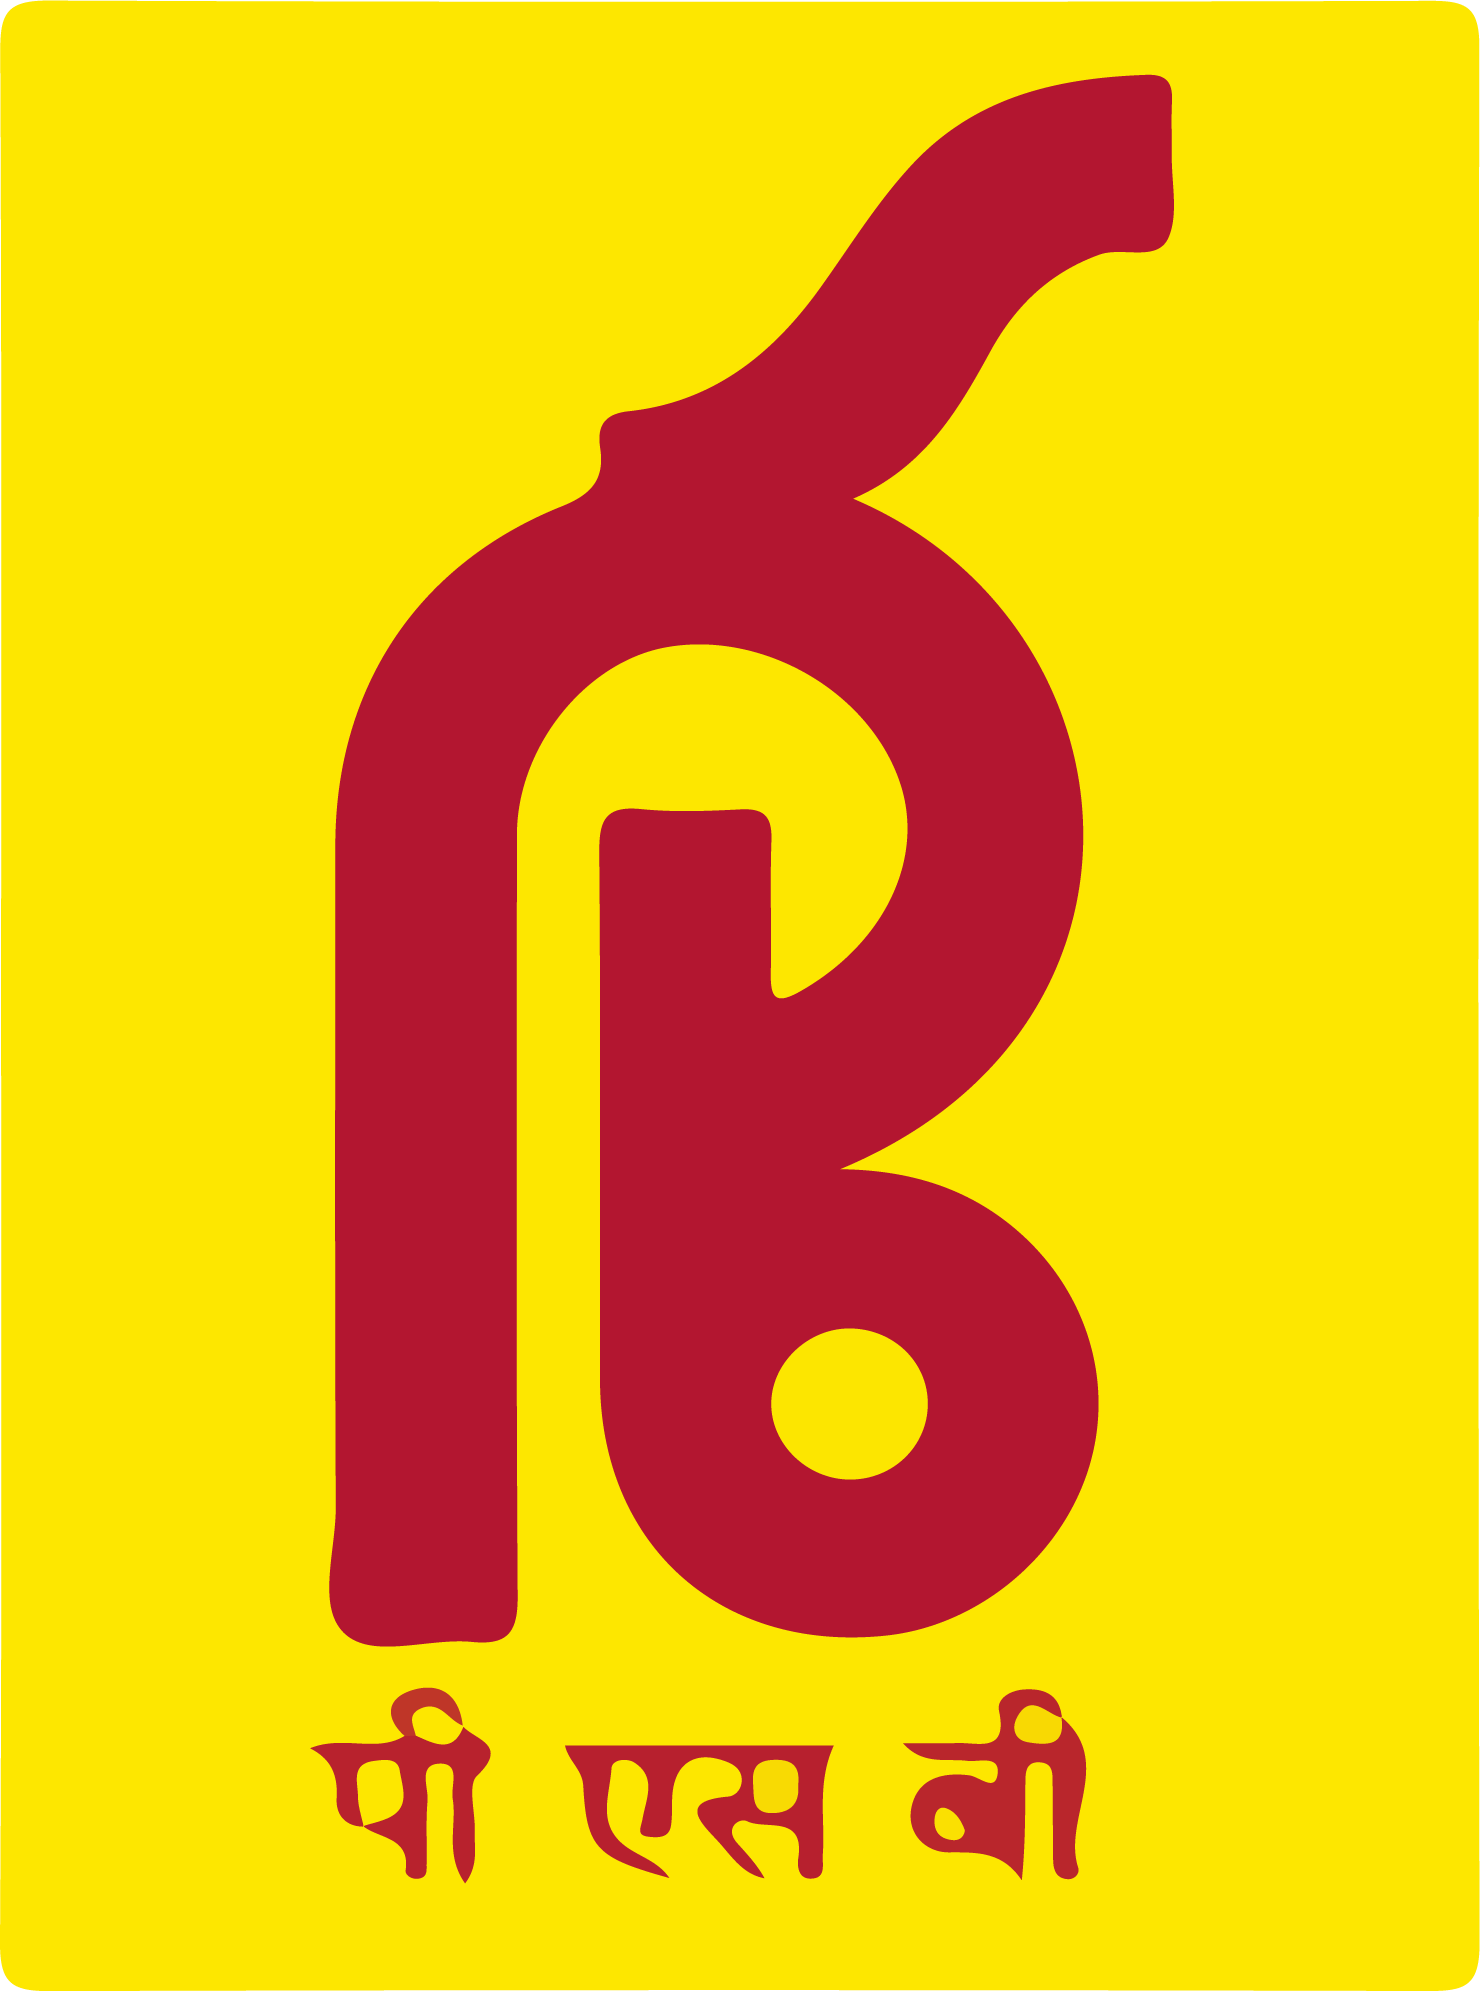 Punjab & Sind Bank logo (PNG transparent)